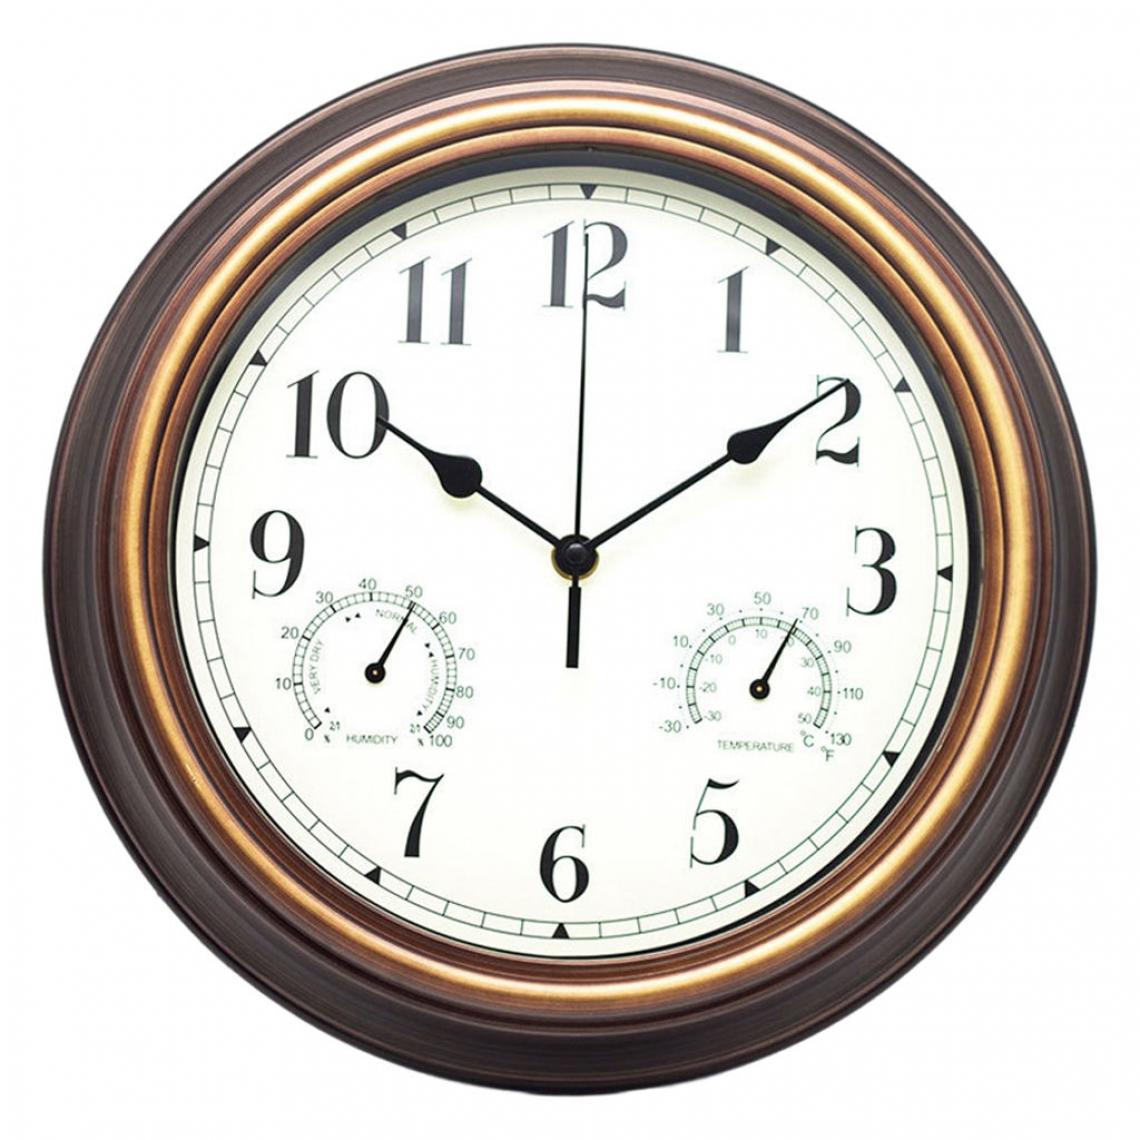 marque generique - Horloge à quartz murale silencieuse sans tic-tac - Horloges, pendules